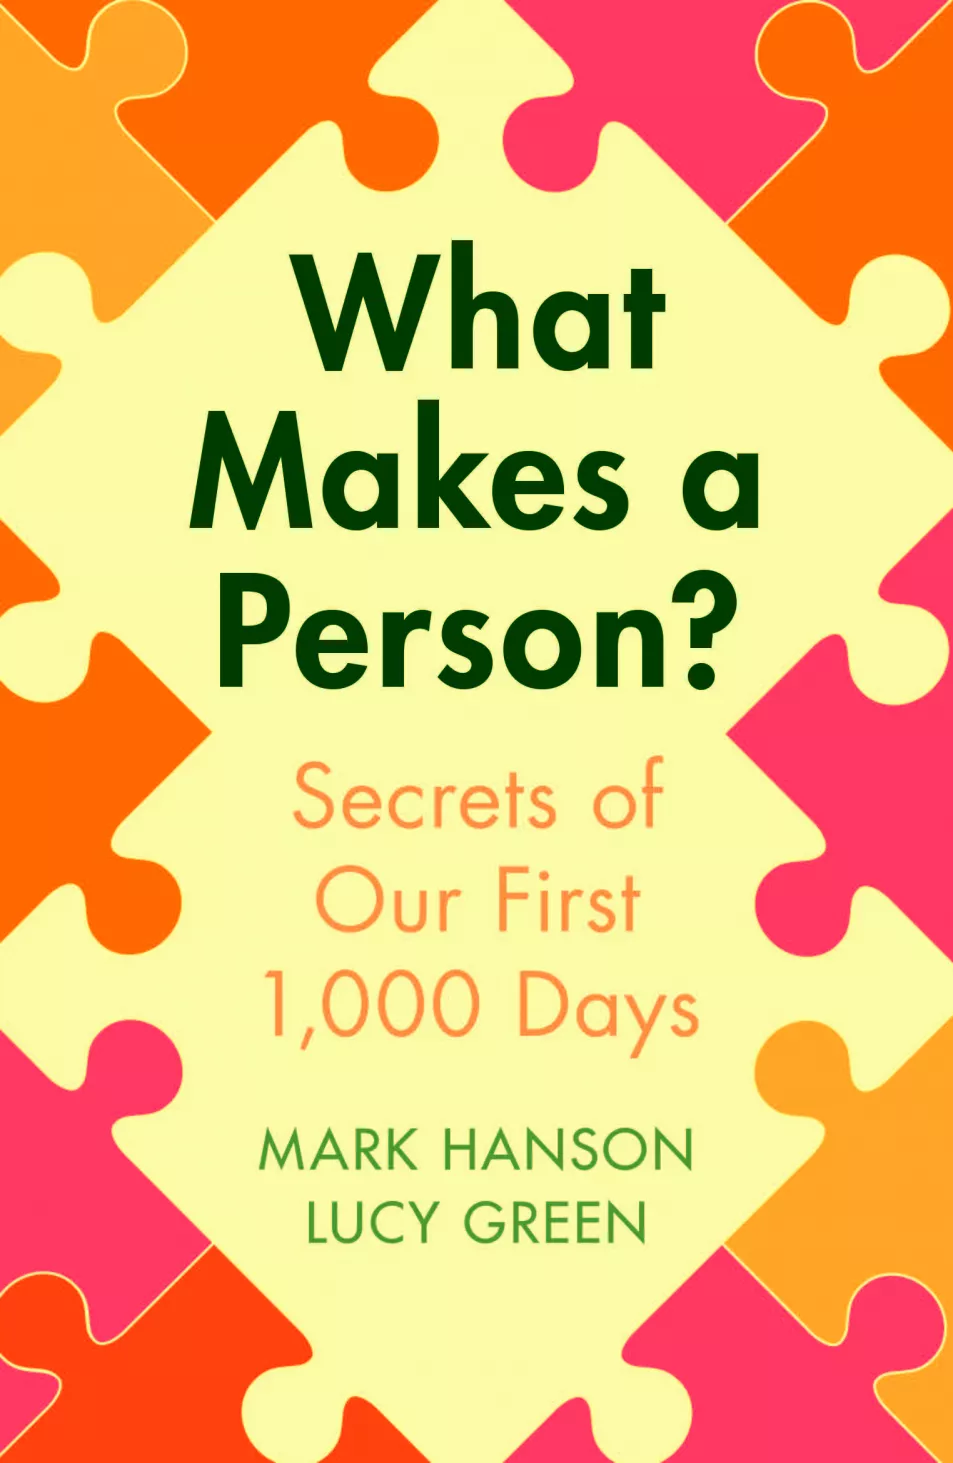 What Makes a Person? cover (Cambridge University Press/PA)